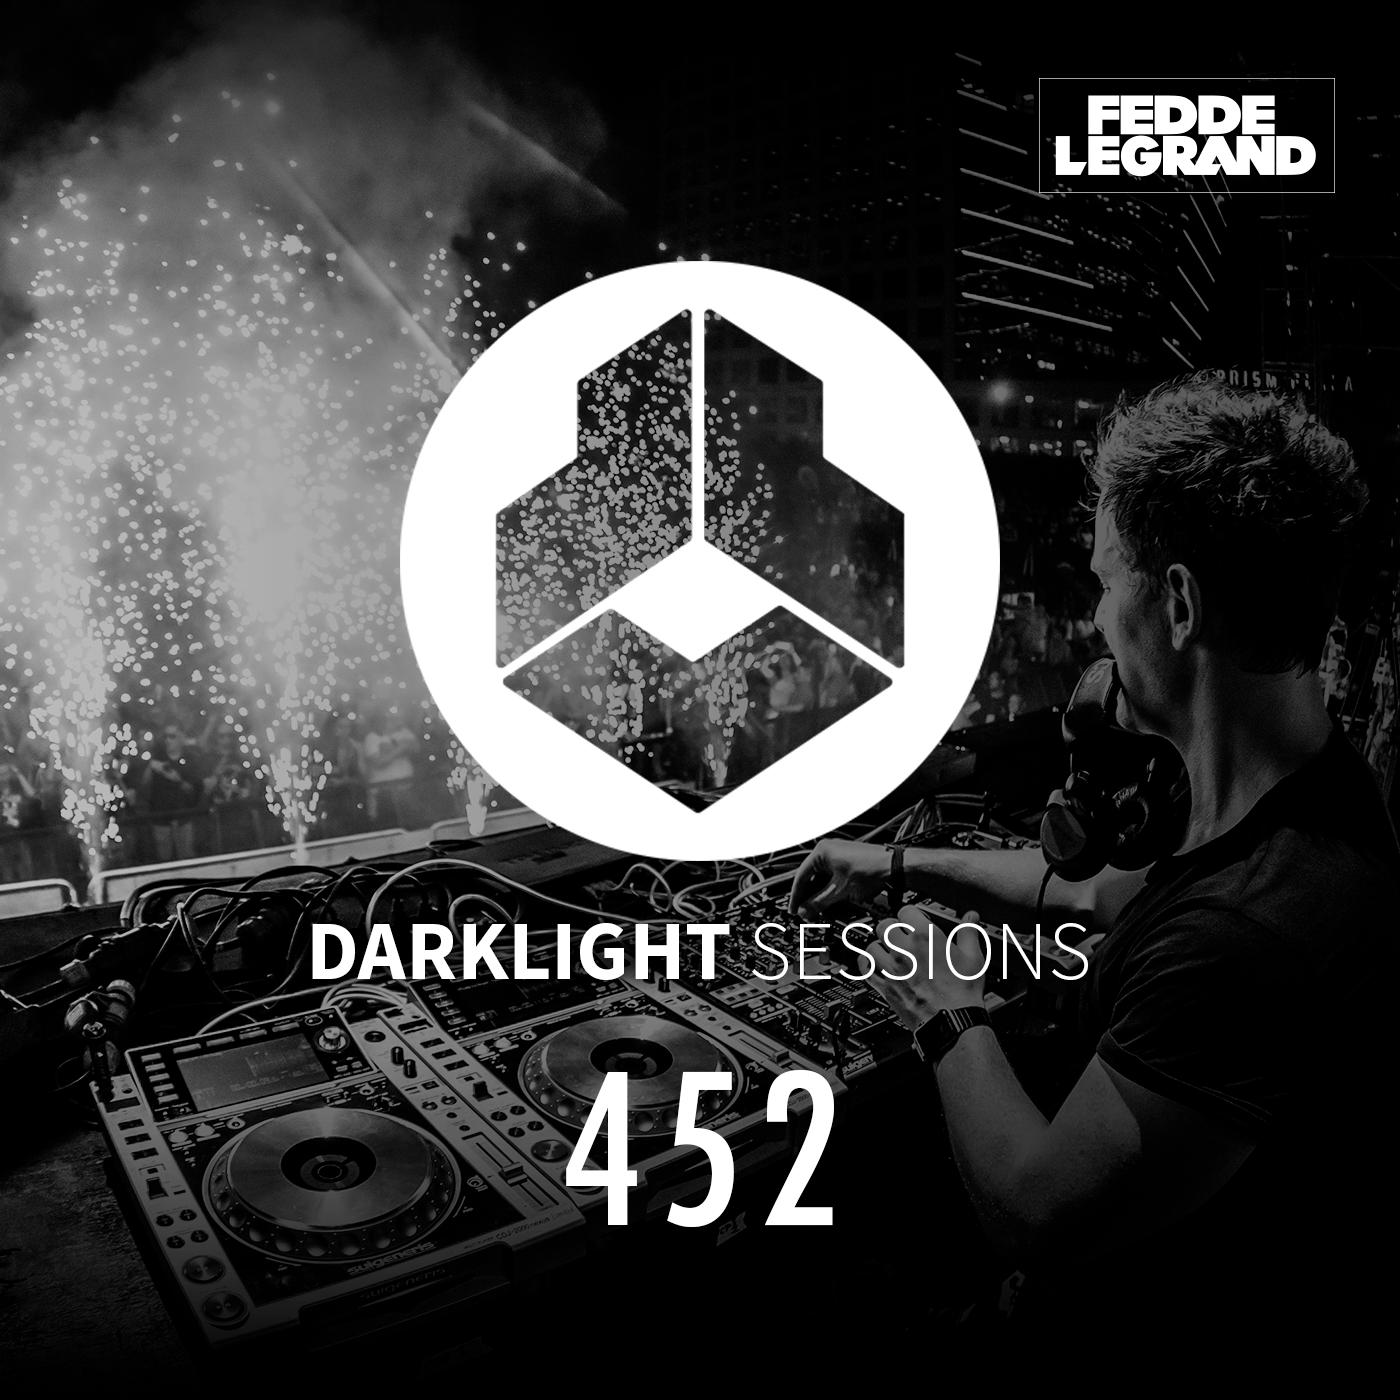 Darklight Sessions 452